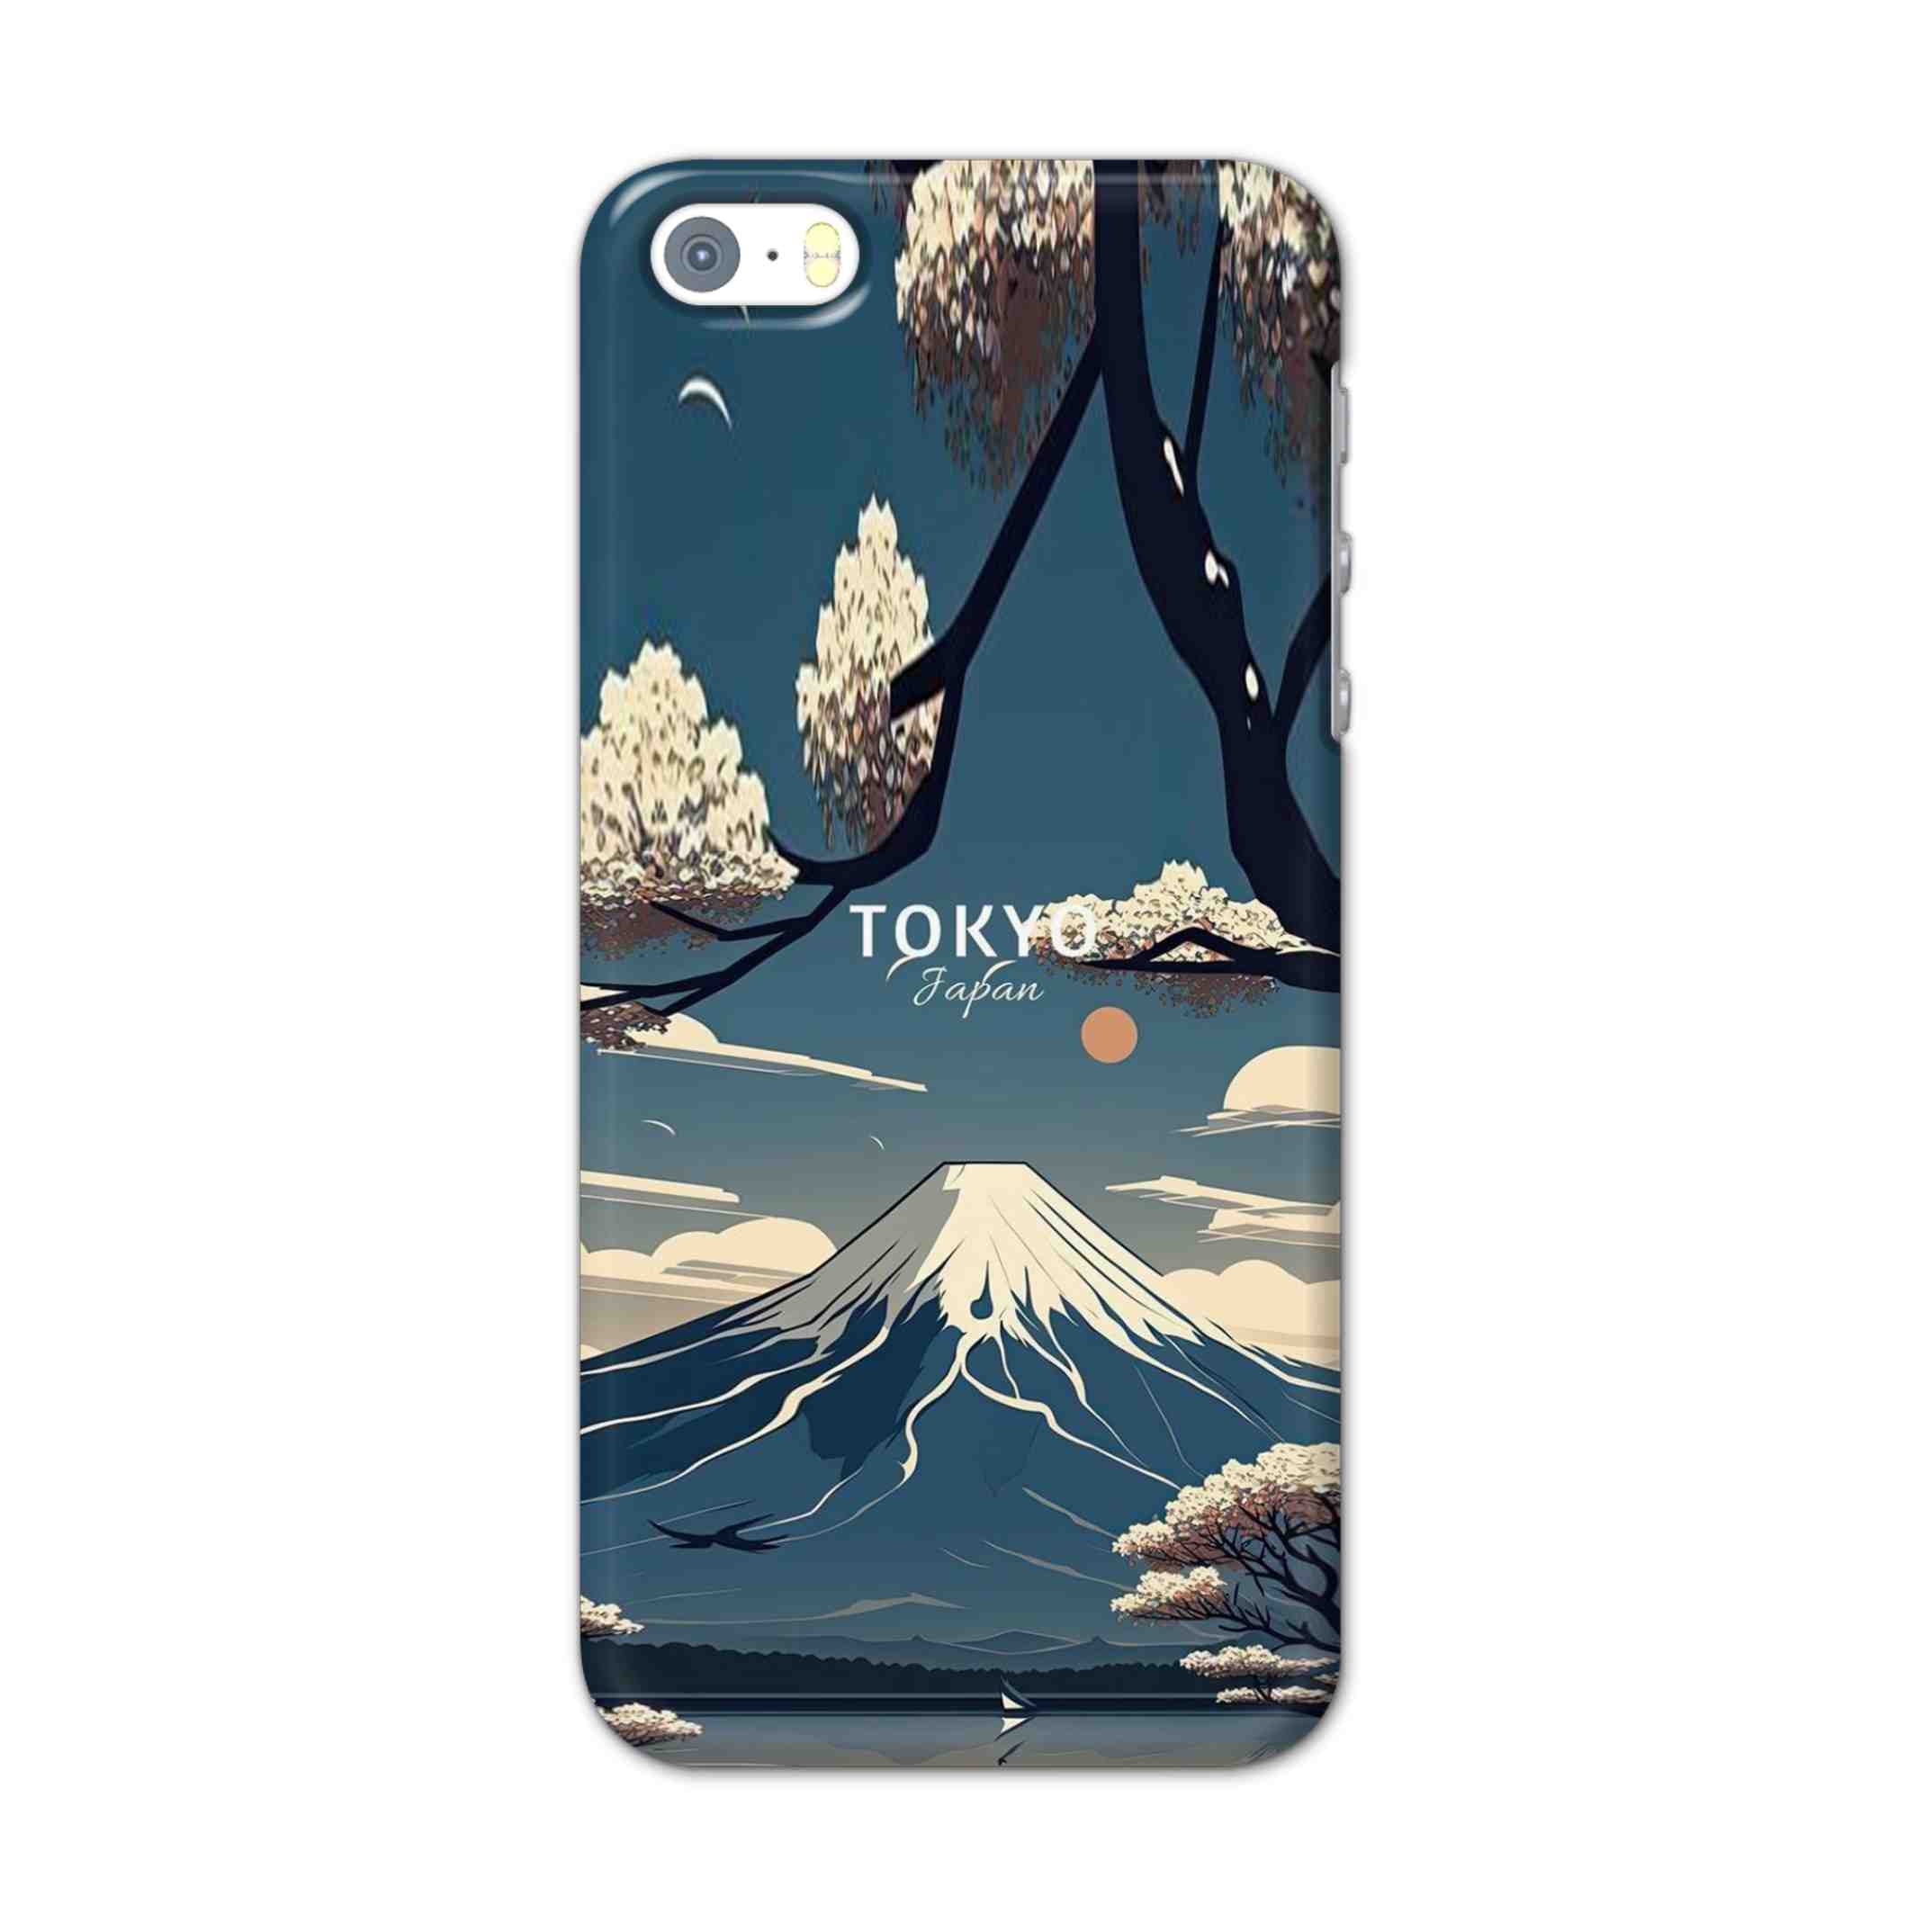 Buy Tokyo Hard Back Mobile Phone Case/Cover For Apple Iphone SE Online